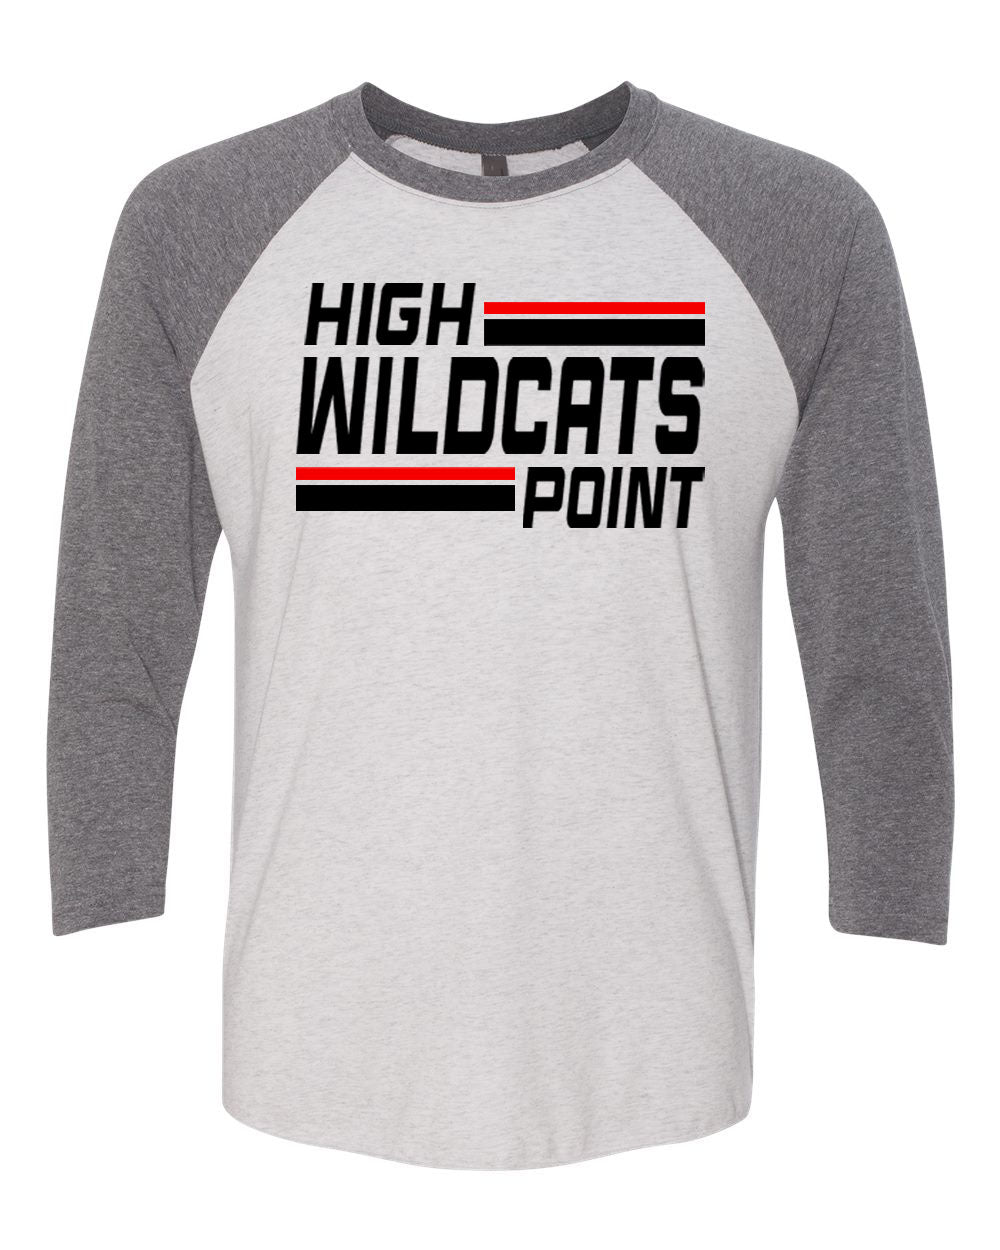 Wildcats Cheer design 4 raglan shirt